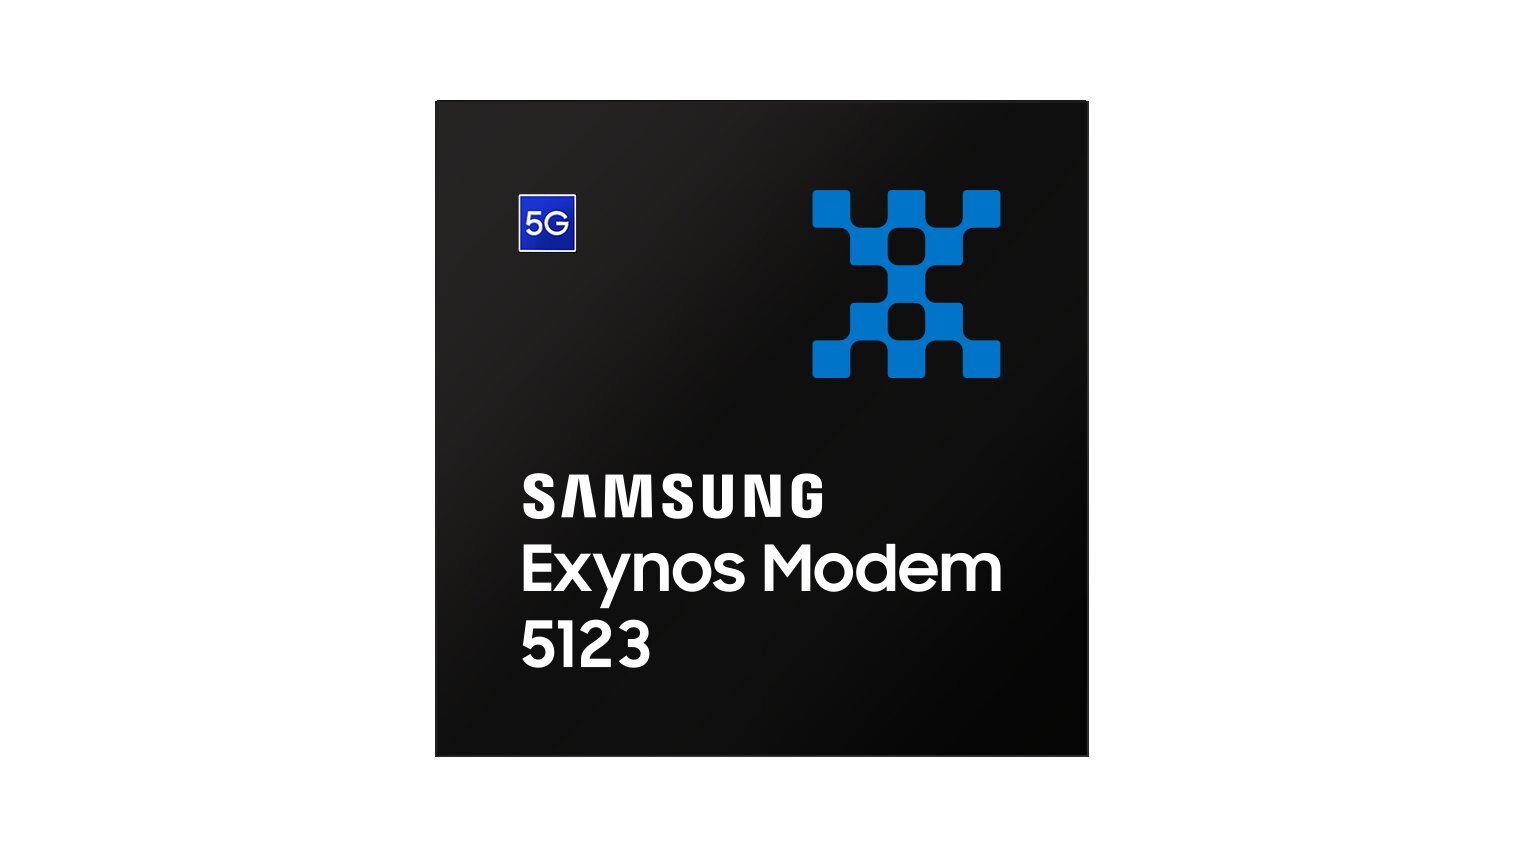 Exynos Modem 5123